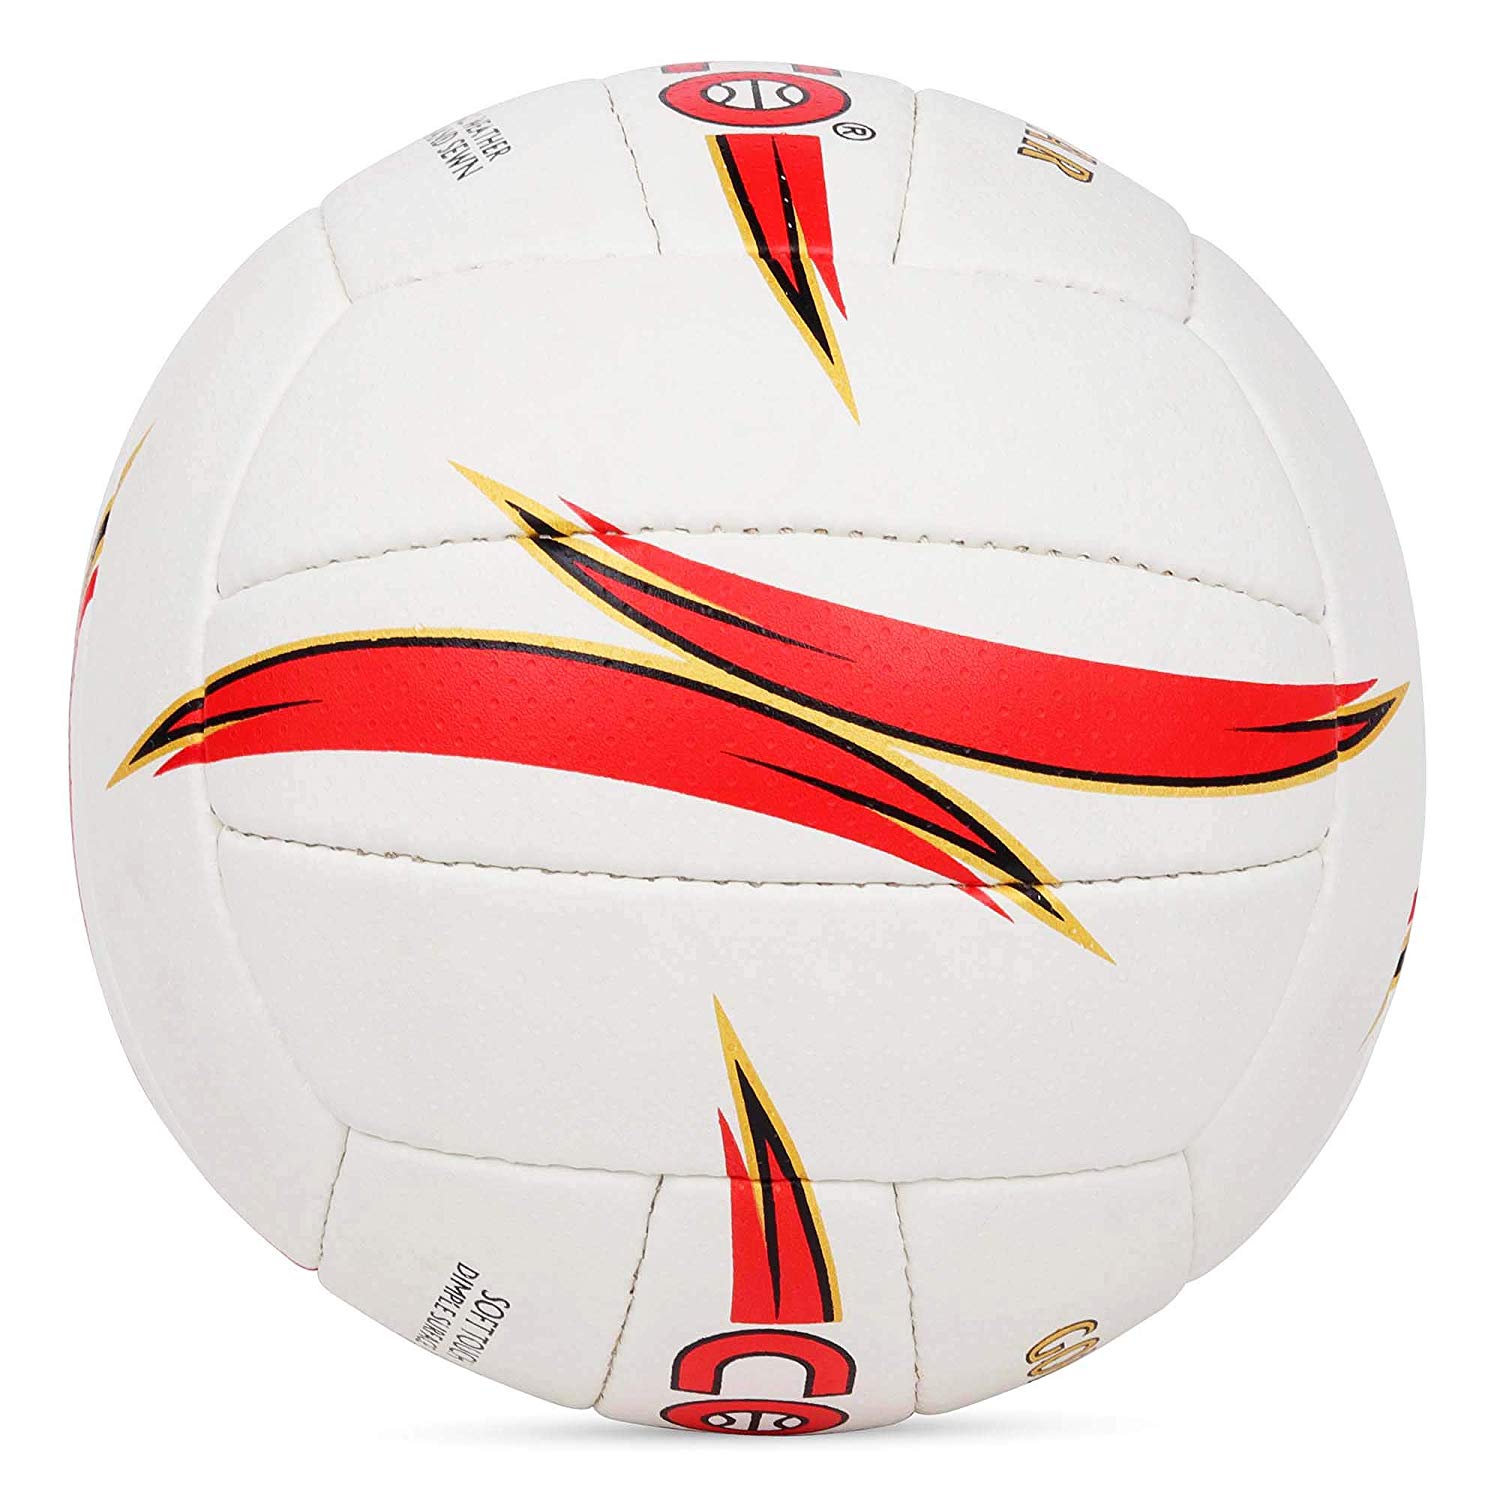 Cosco Gold Star Volley Ball, Size 4 - Best Price online Prokicksports.com